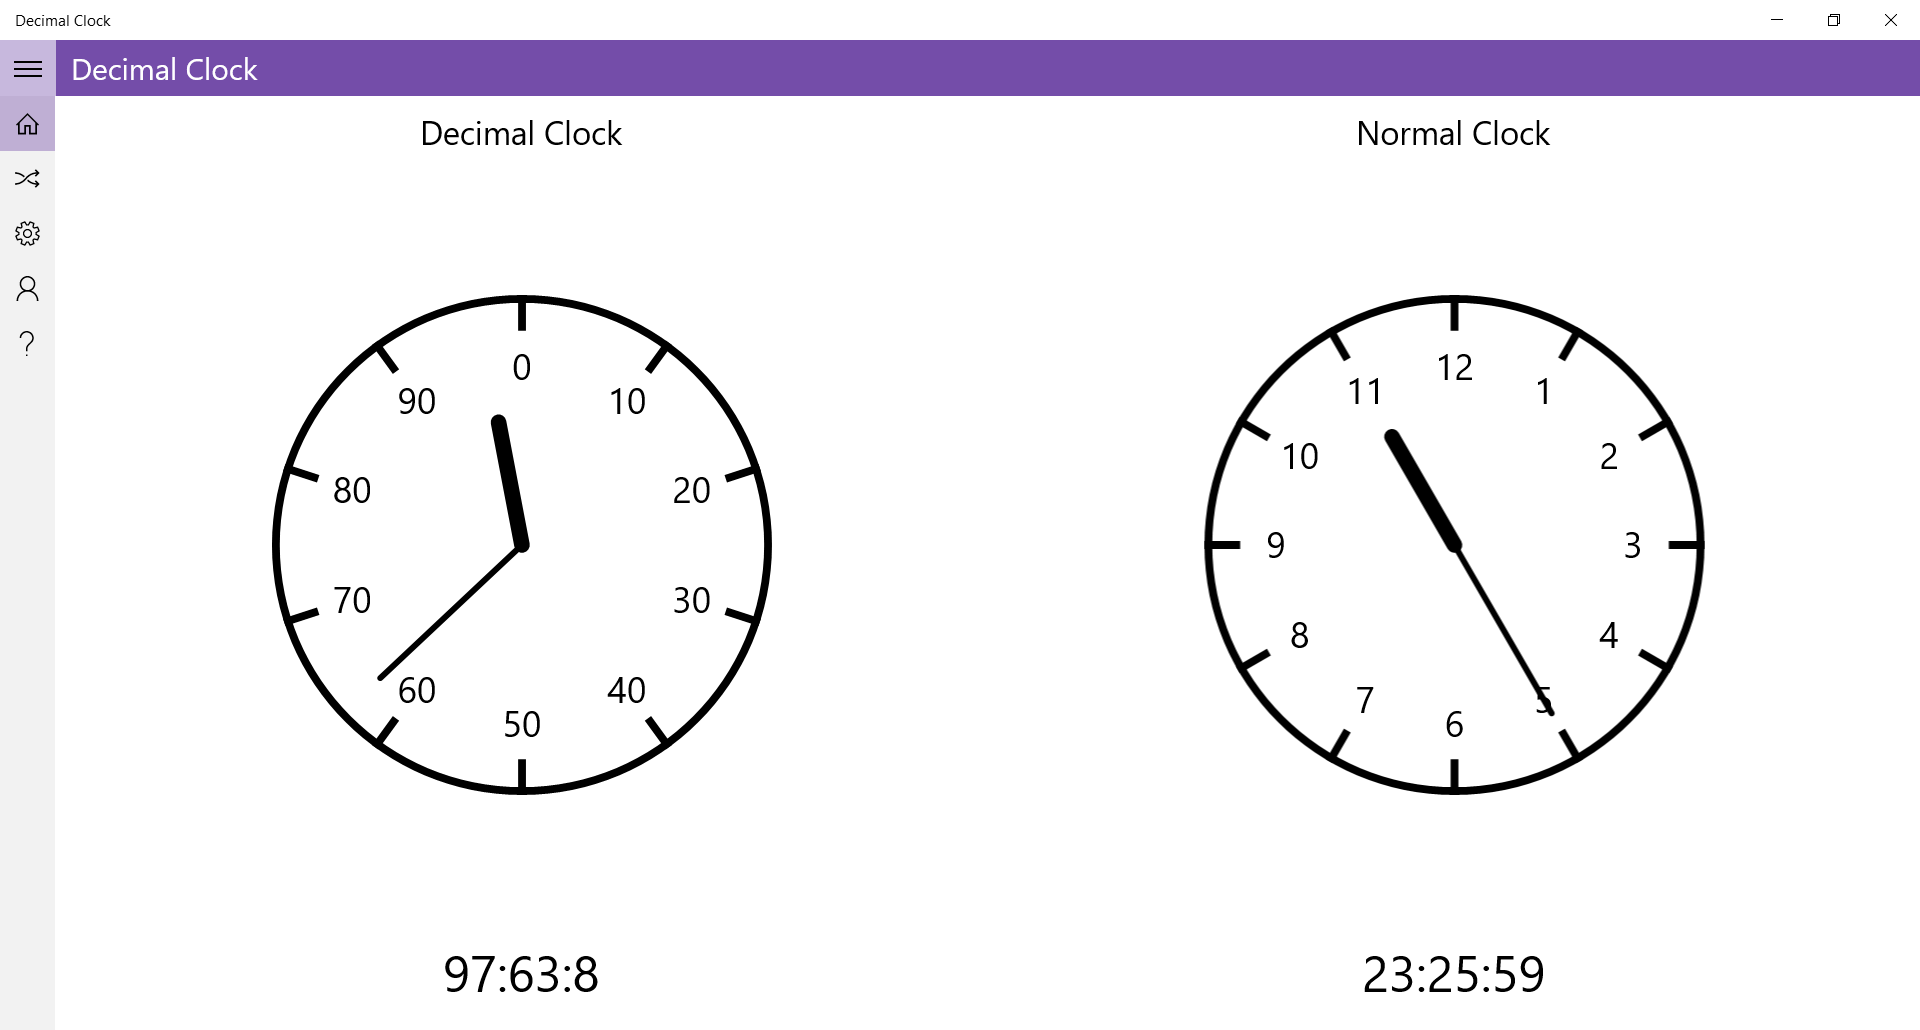 Decimal Clock 100